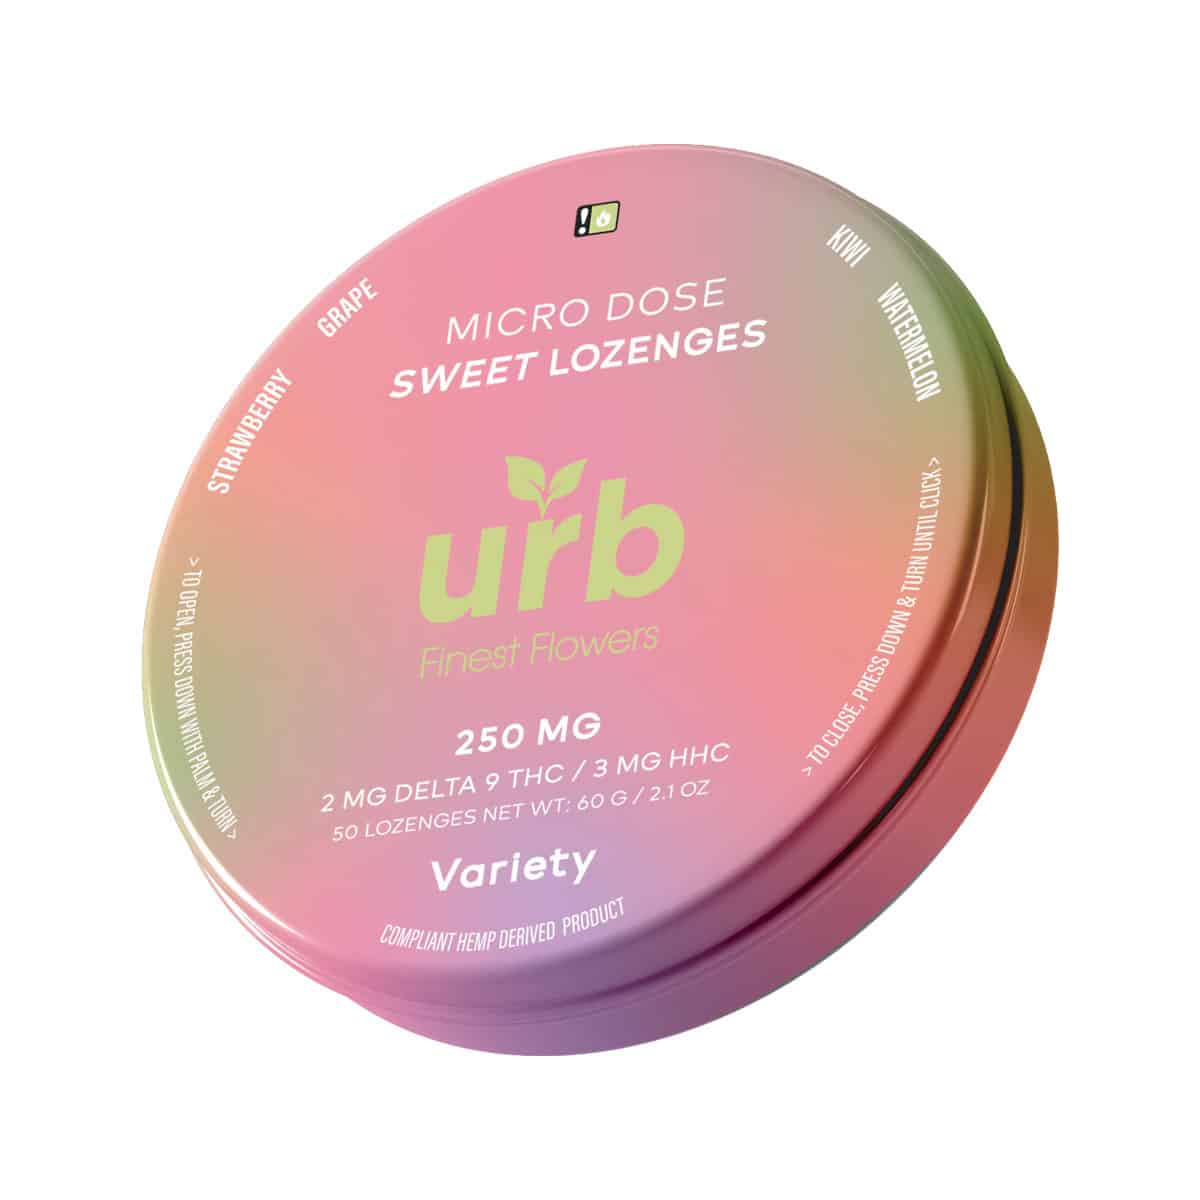 Urb Sweet Lozenges